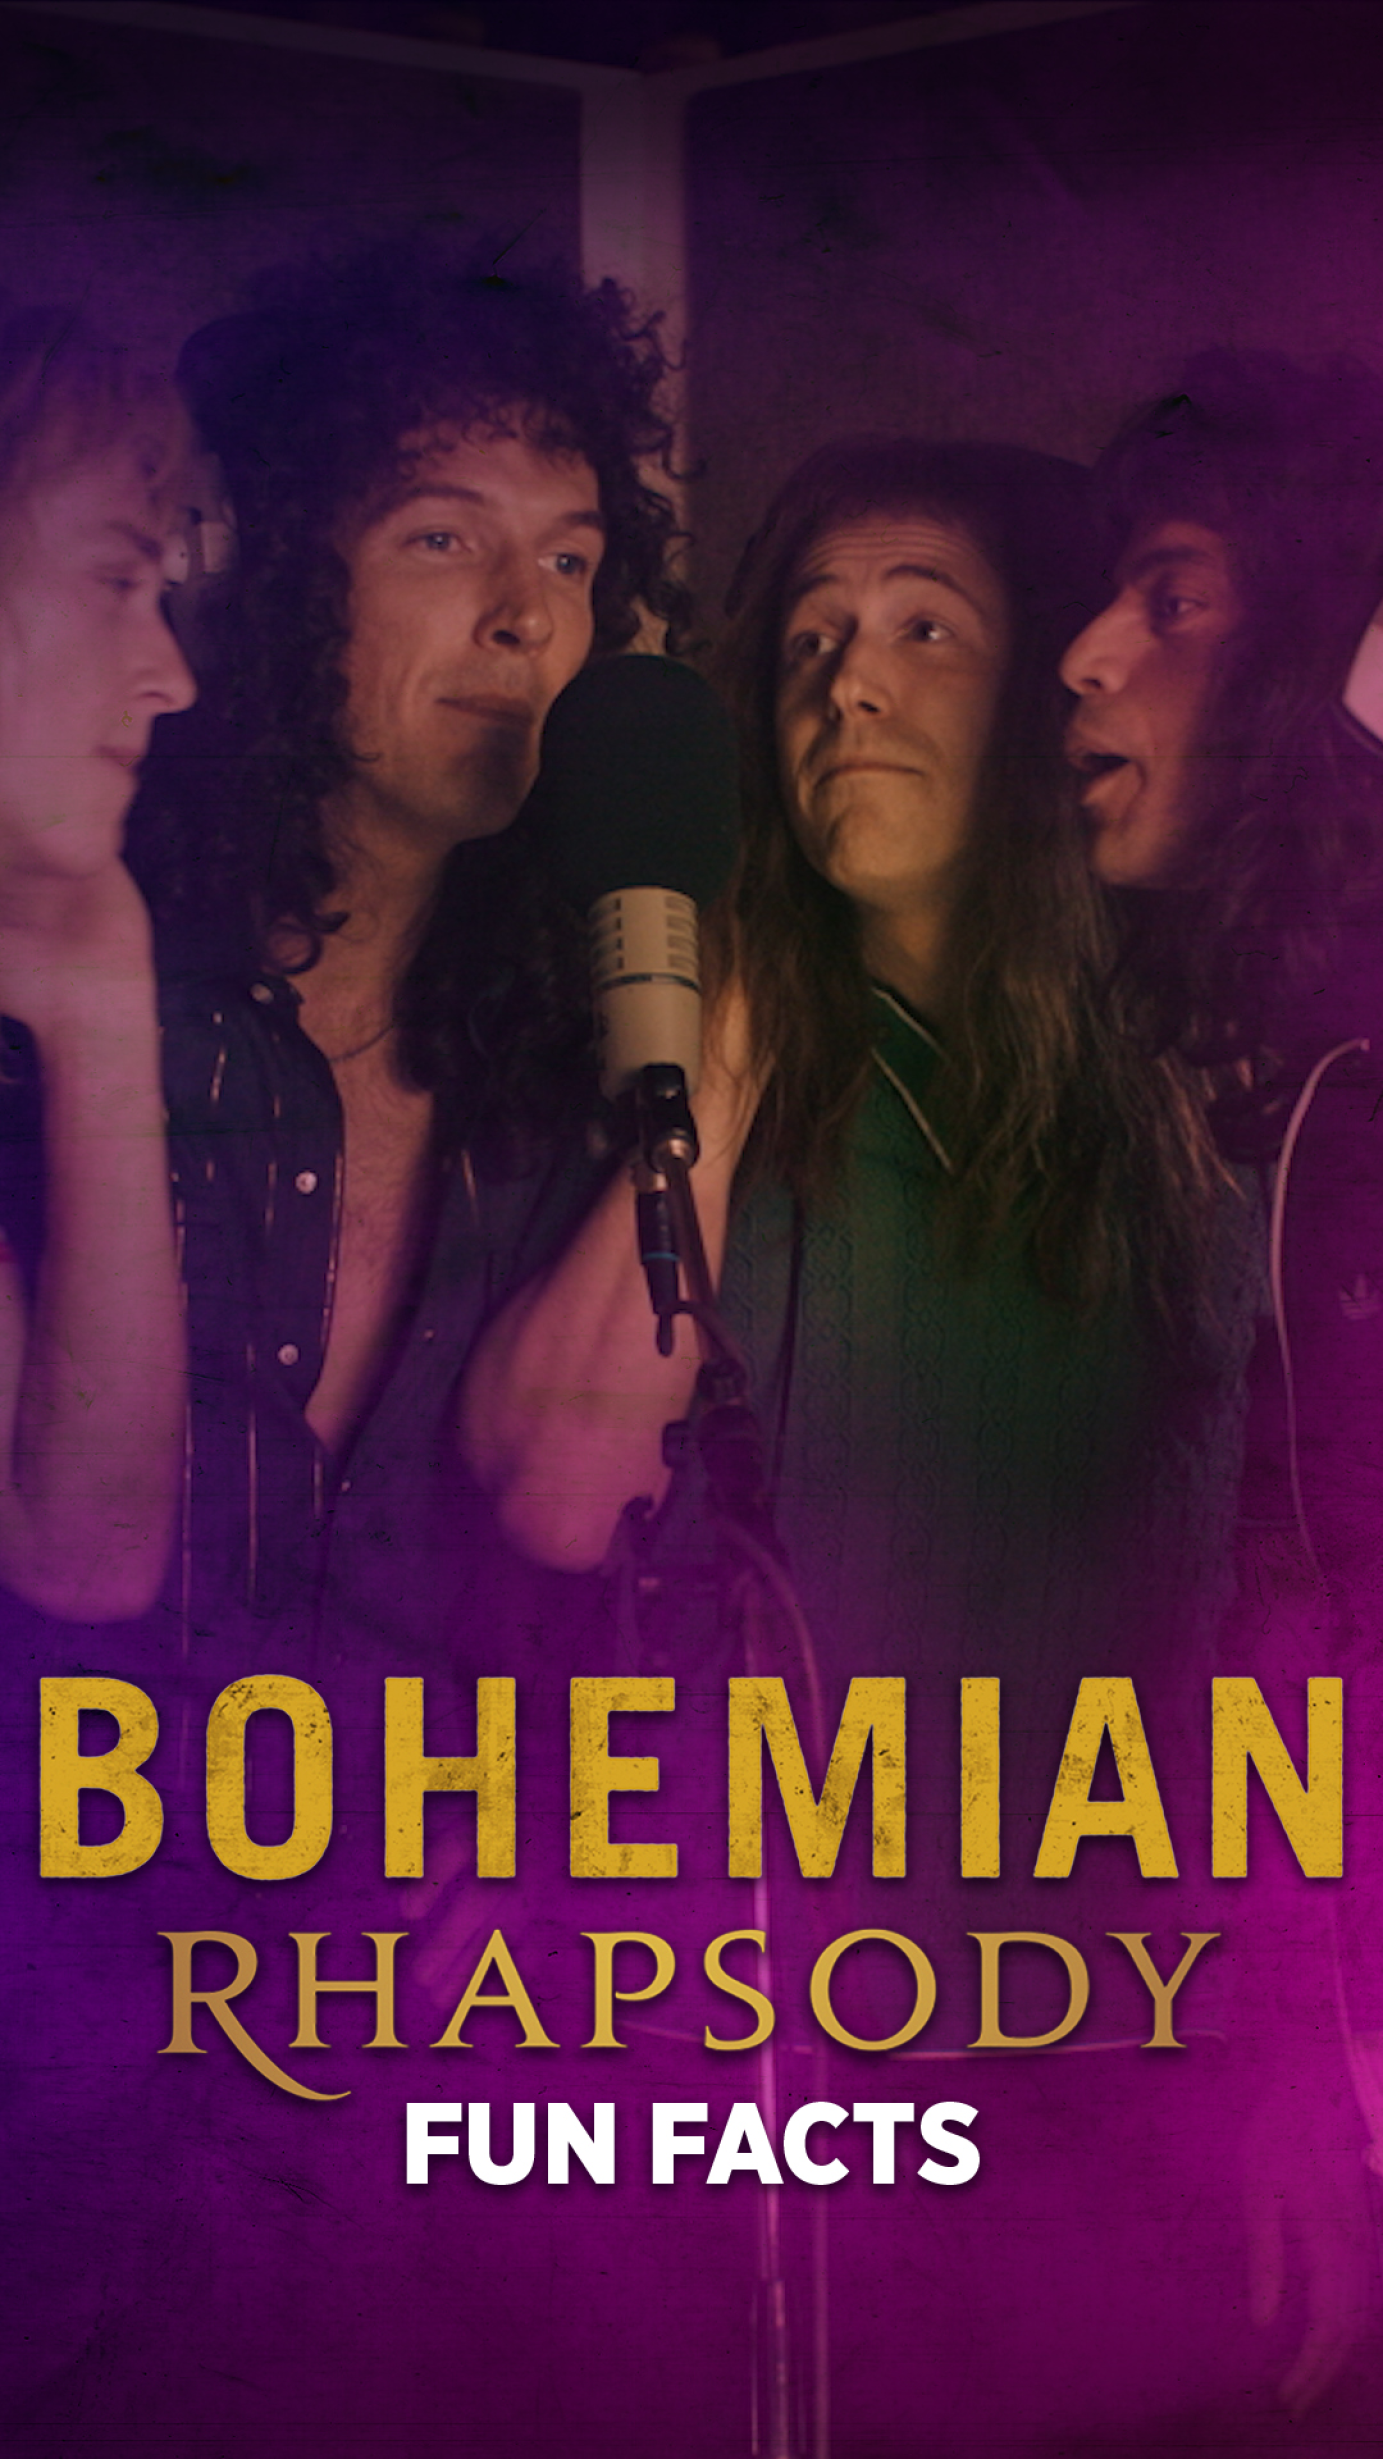 Bohemian Rhapsody social content creation